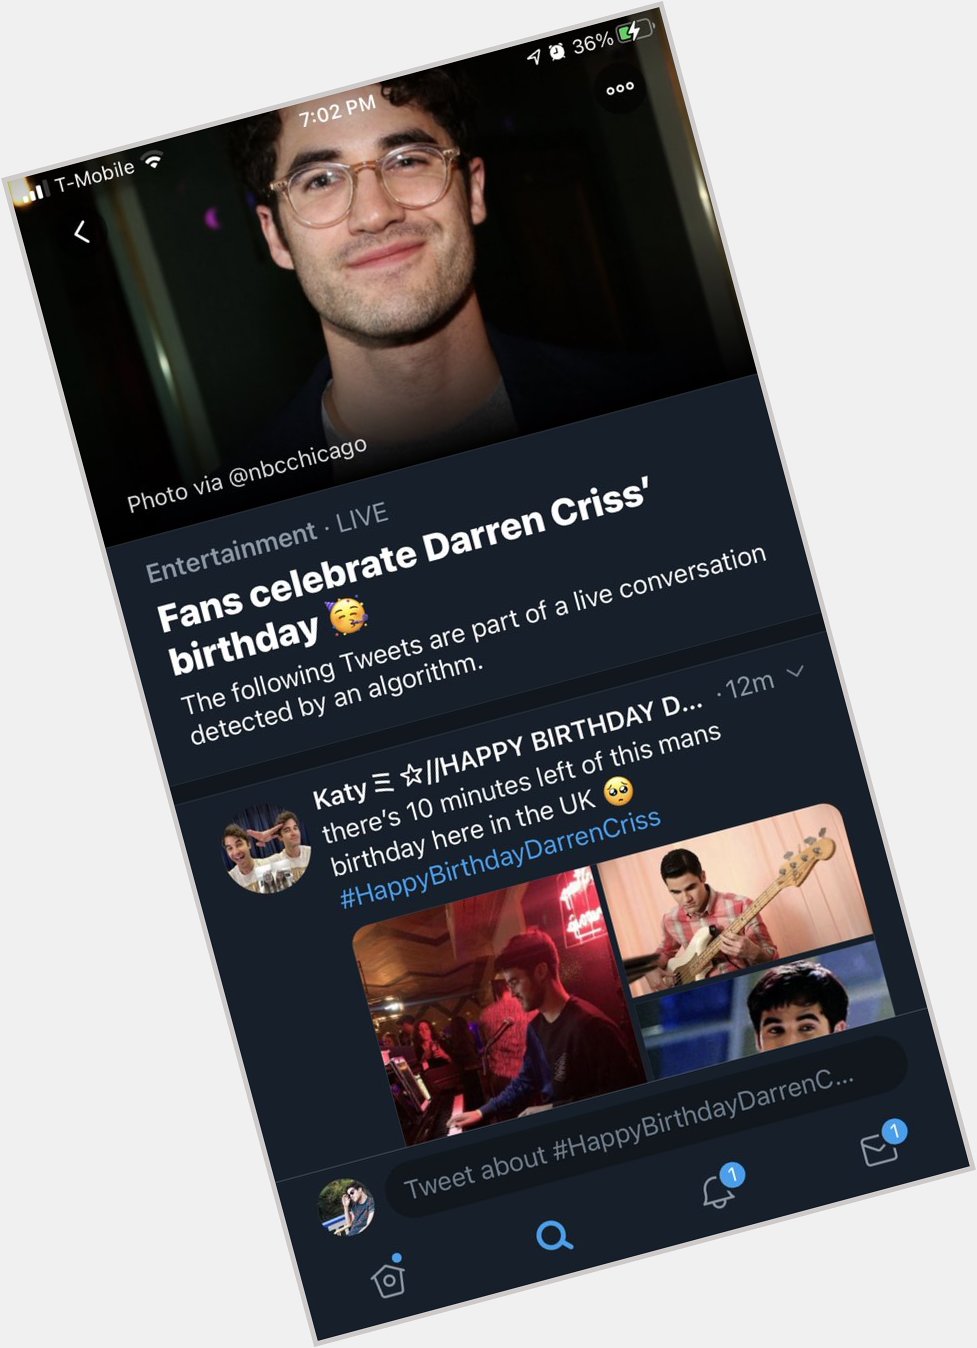 WE MADE IT U GUYS Darren Criss happy birthday u bastard  